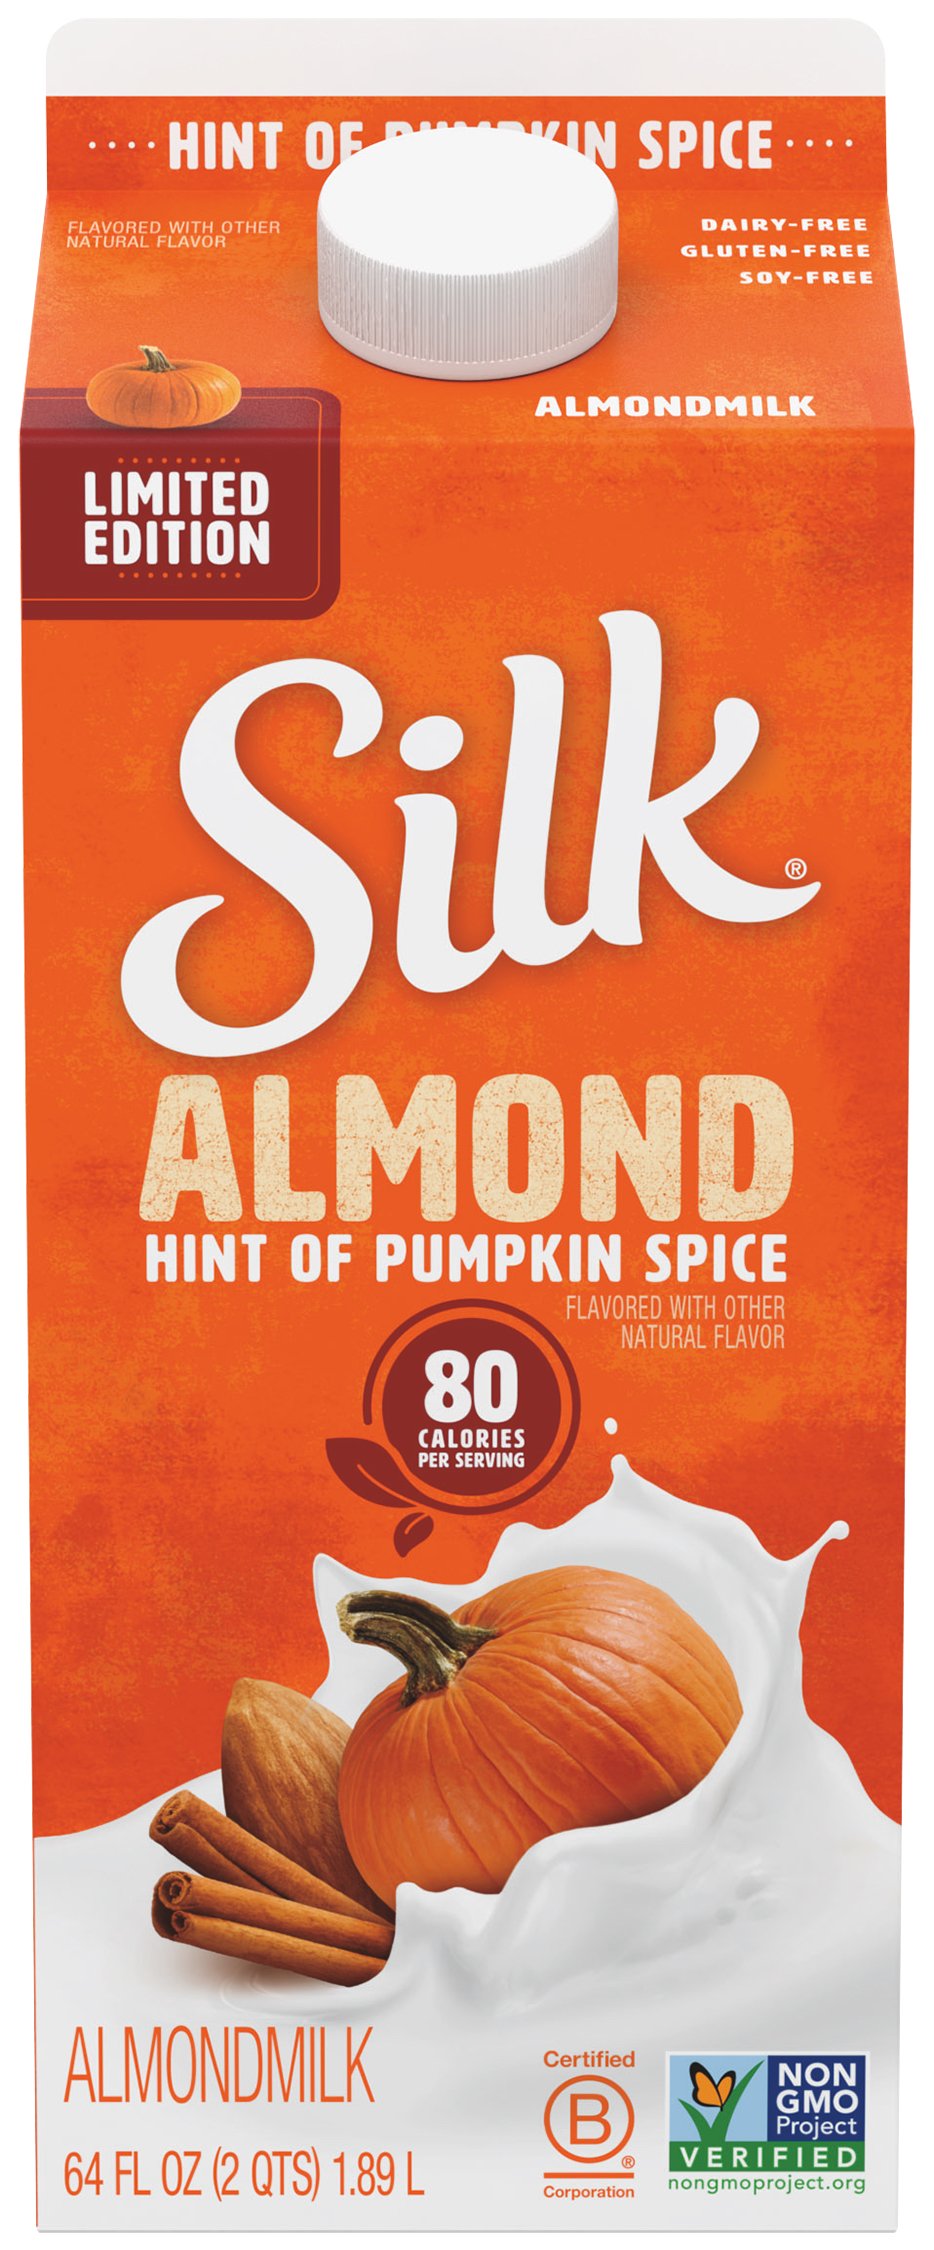 Silk debuts Pumpkin Spice beverage and creamer - FoodBev Media